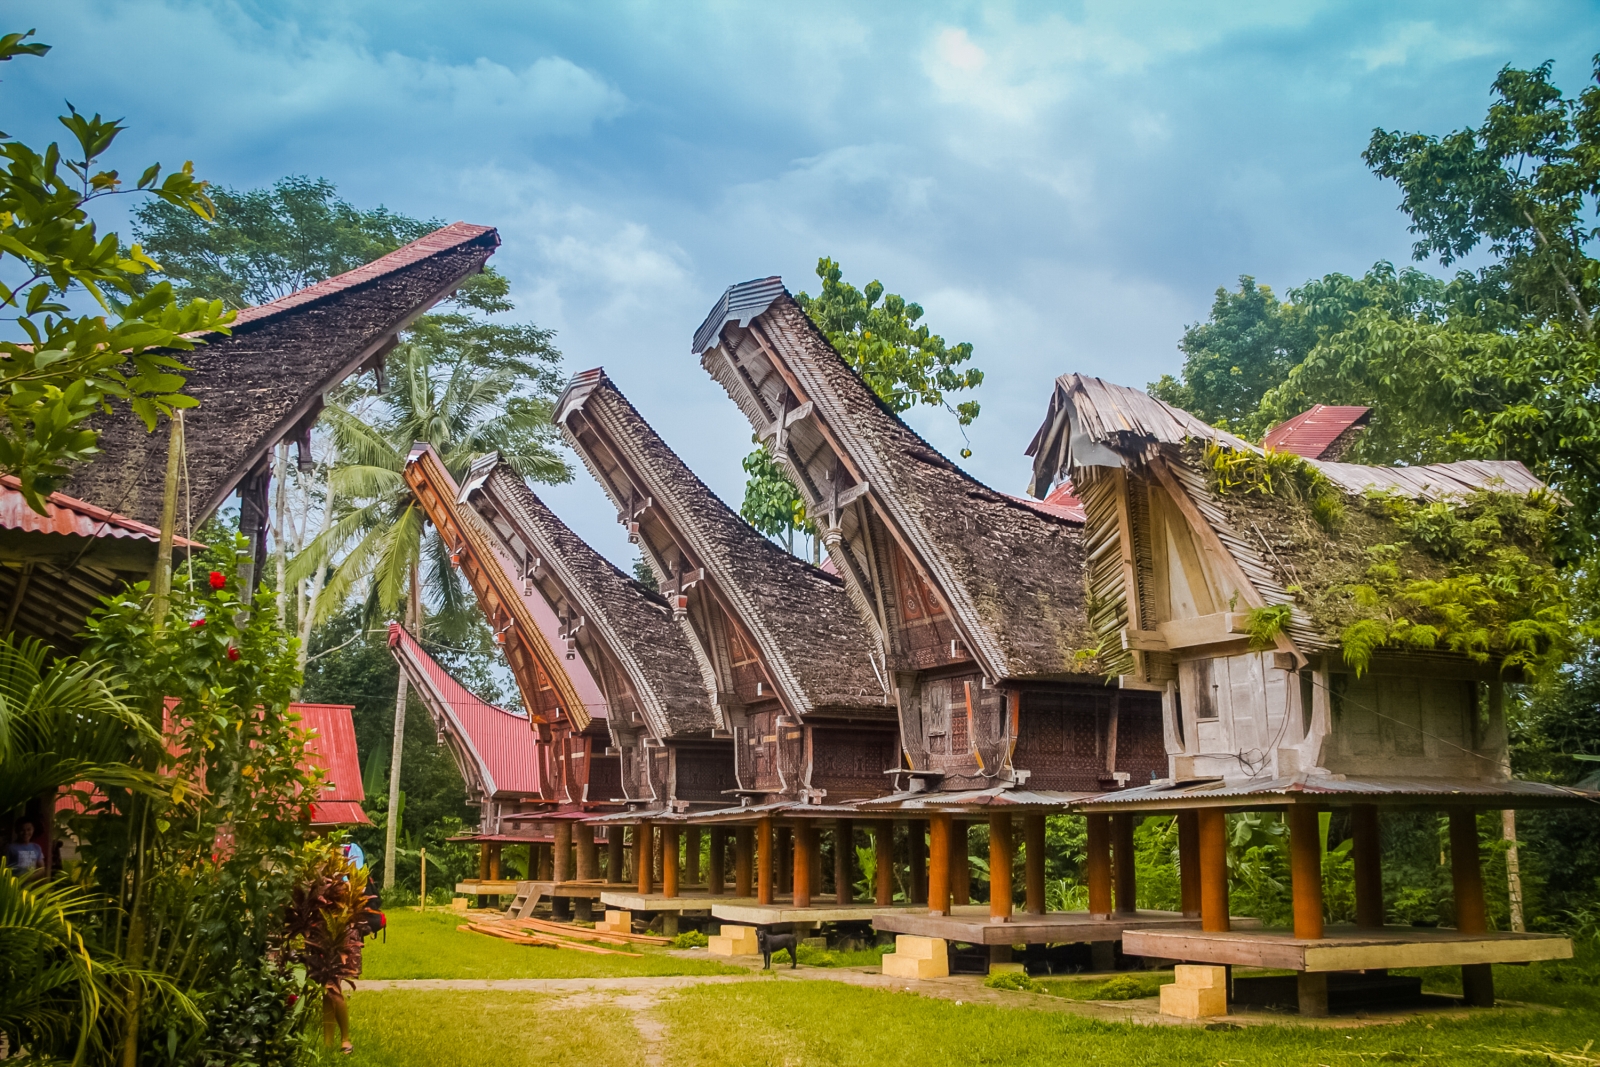 A row of traditional Toraja barns